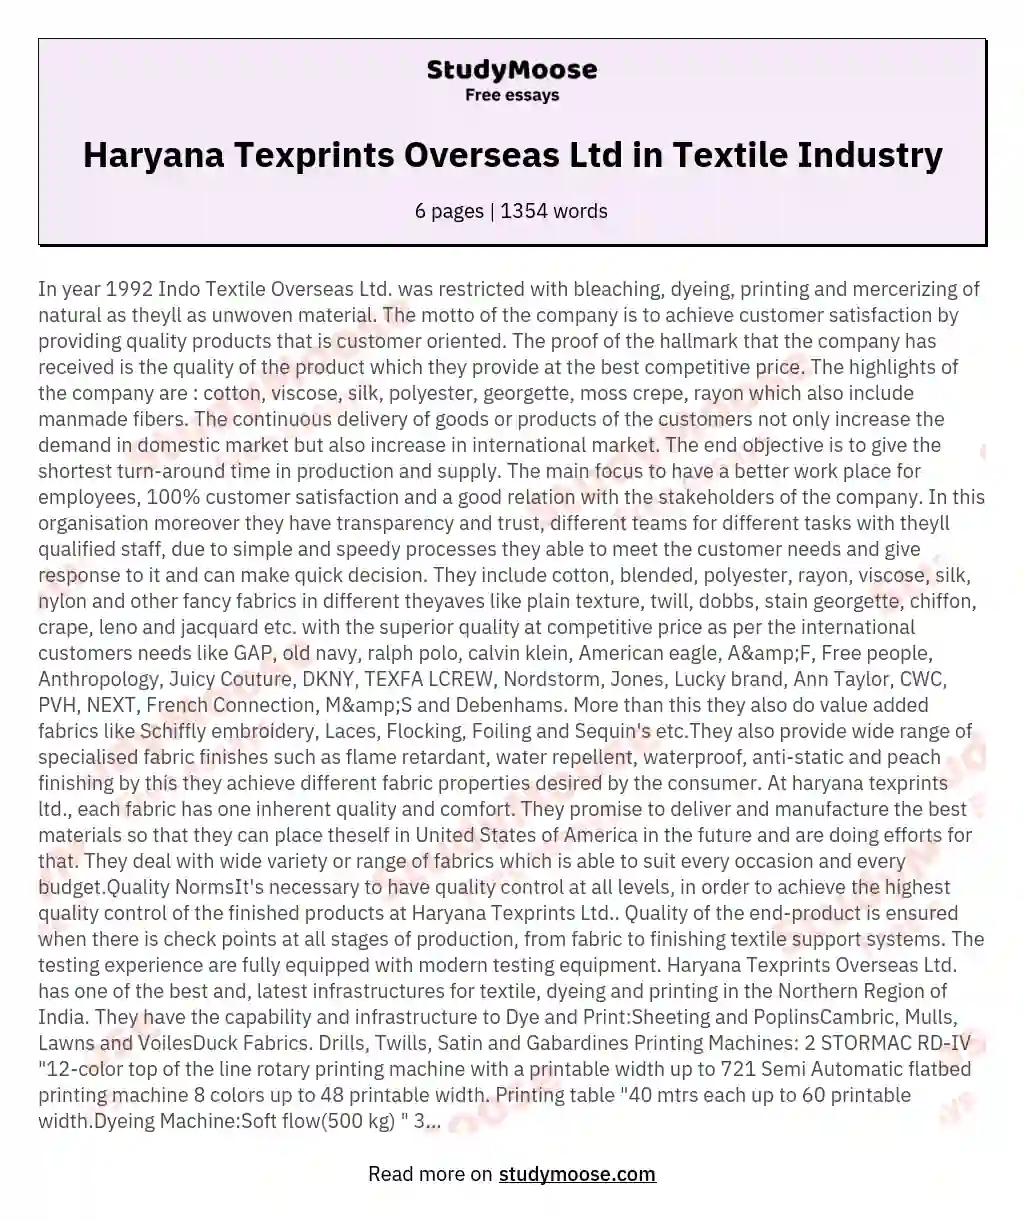 Haryana Texprints Overseas Ltd in Textile Industry